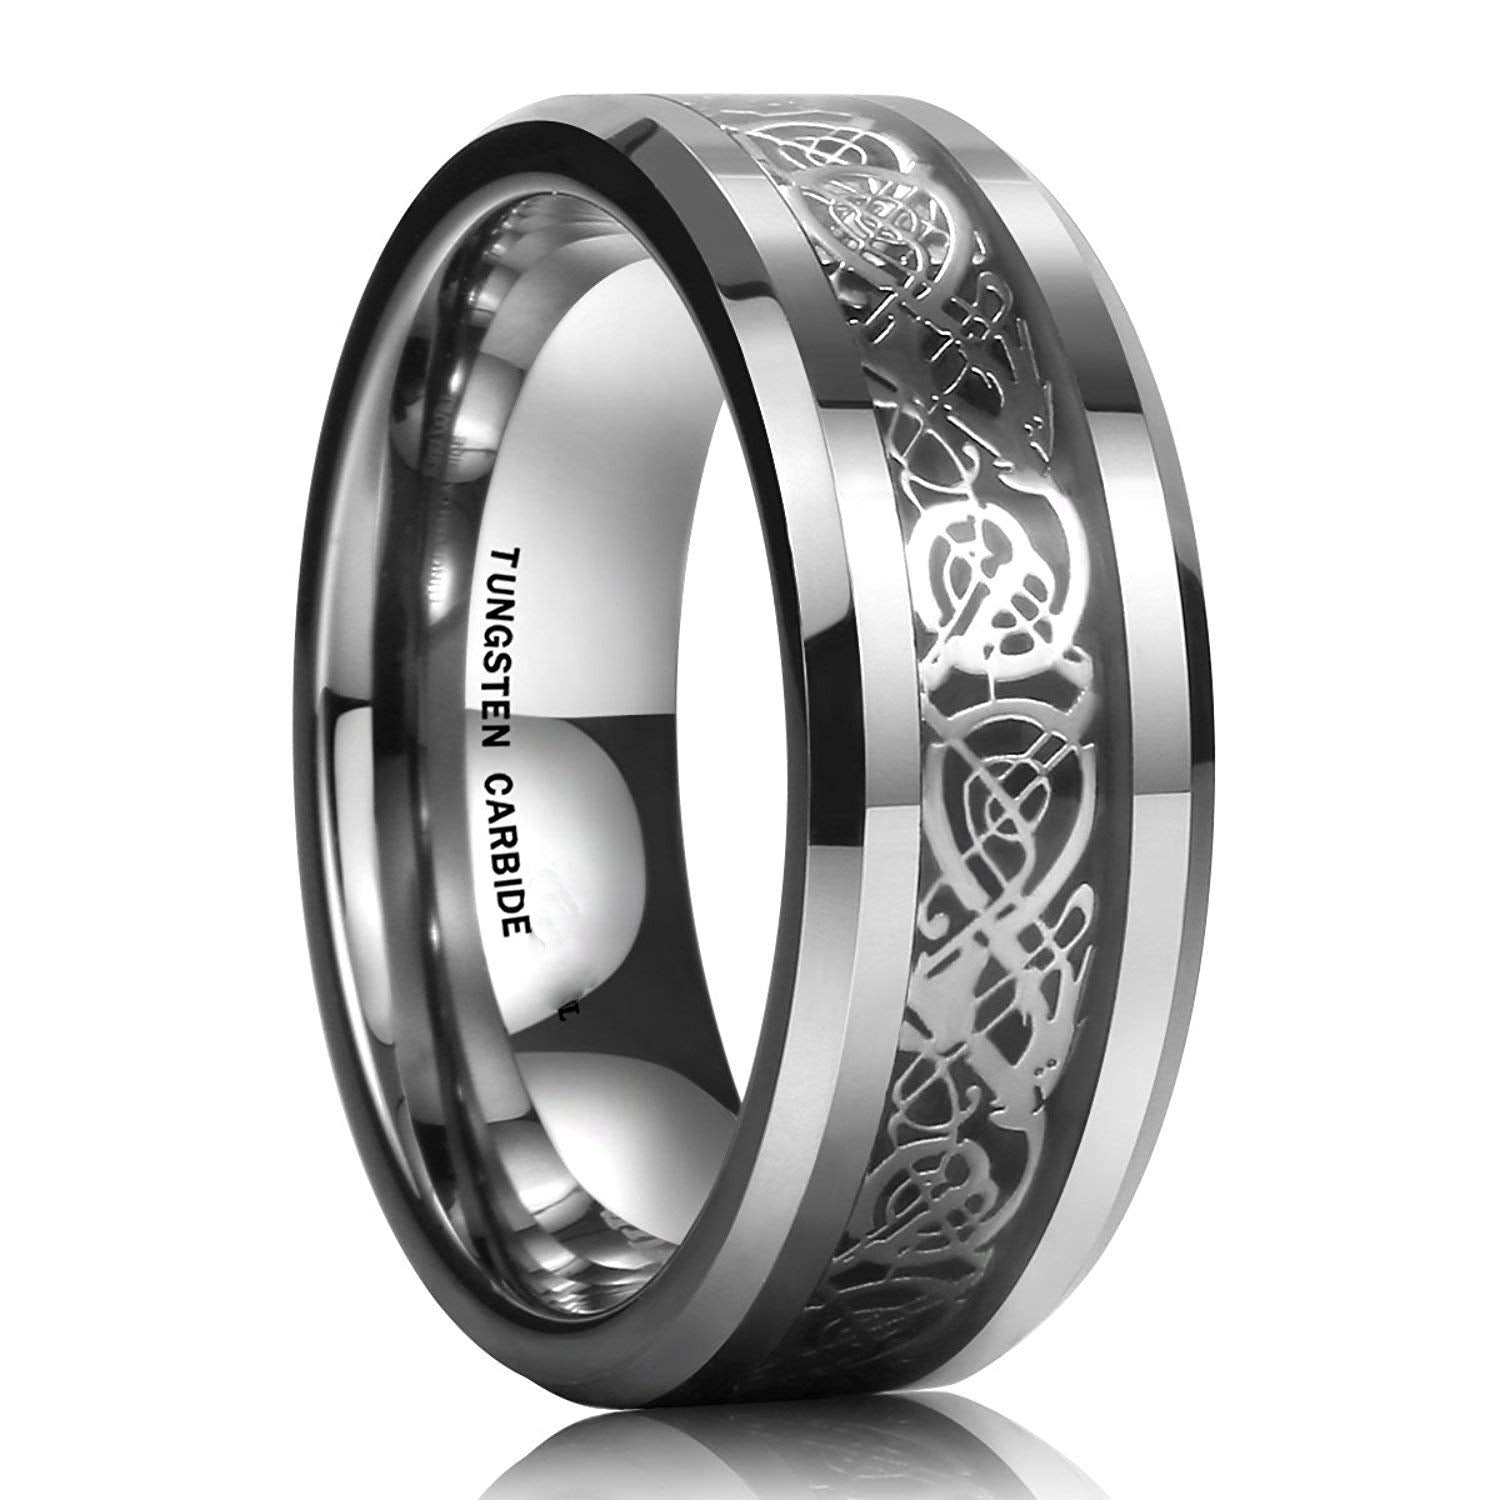 Silver Rings Men Women S.Steel Black Stone Chevalier Oval Shape For Pinky  Ring | eBay